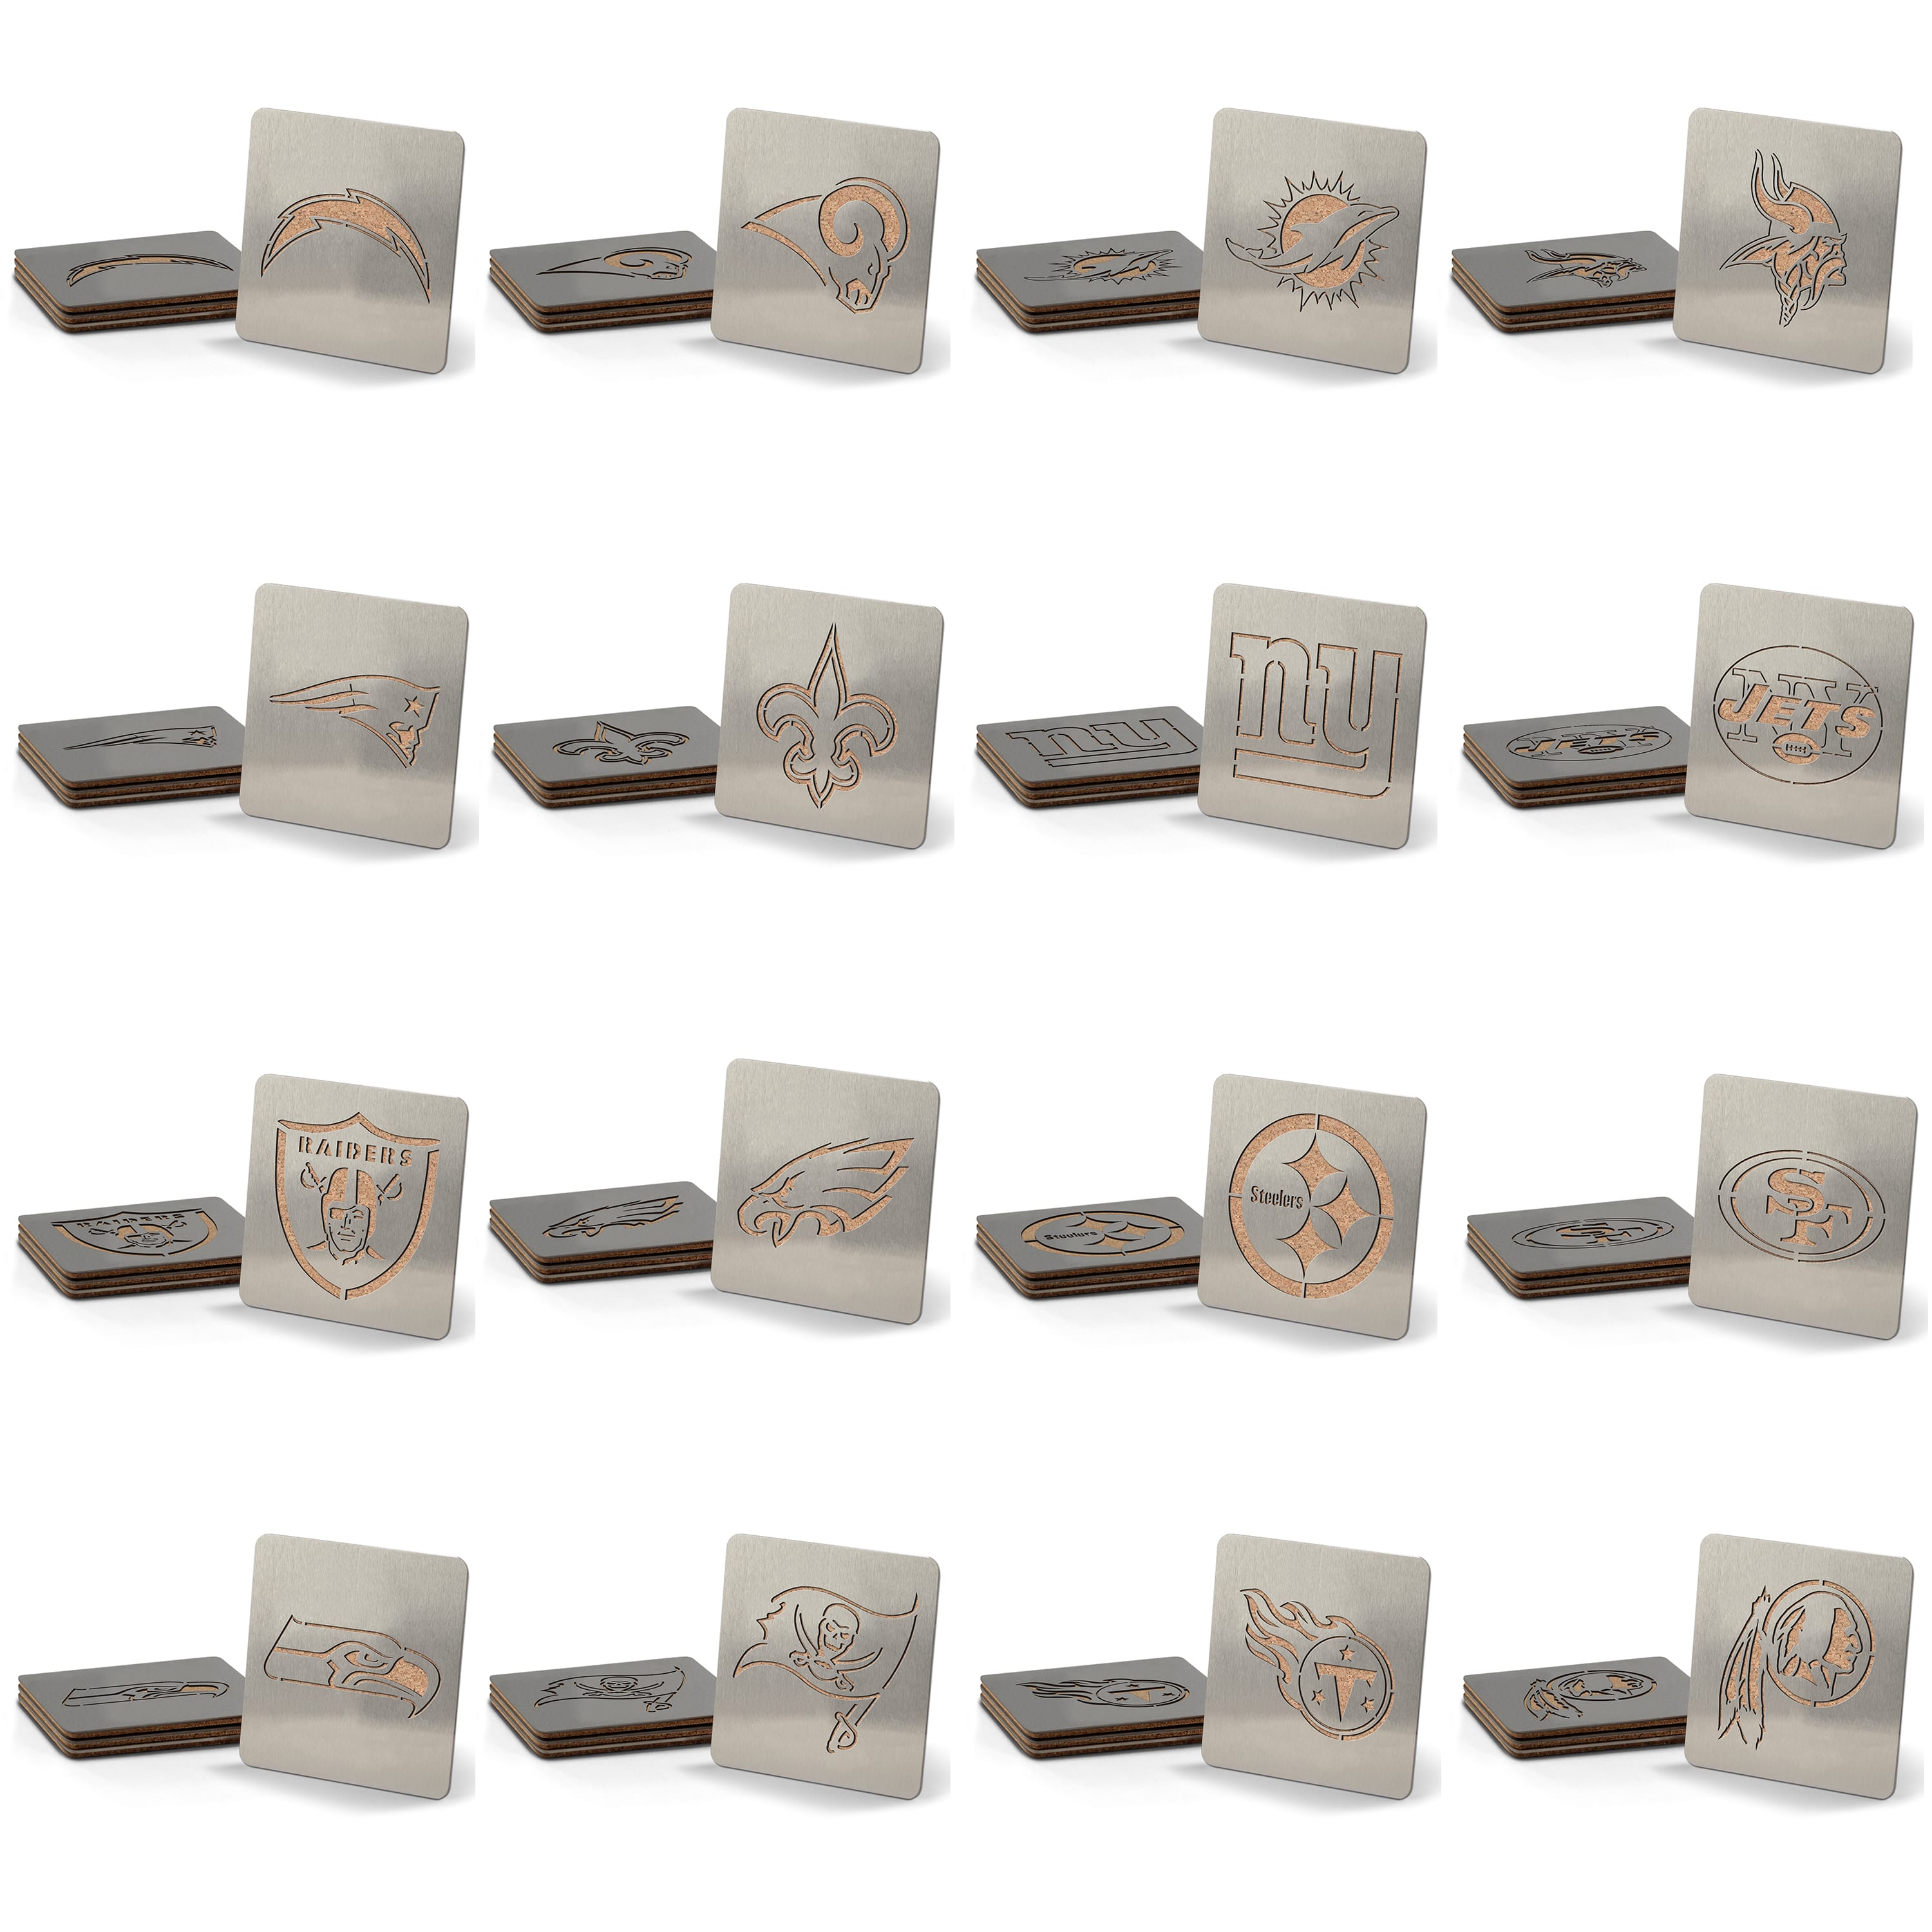 Oakland Raiders Boasters Stainless Steel Coasters - Set of 4